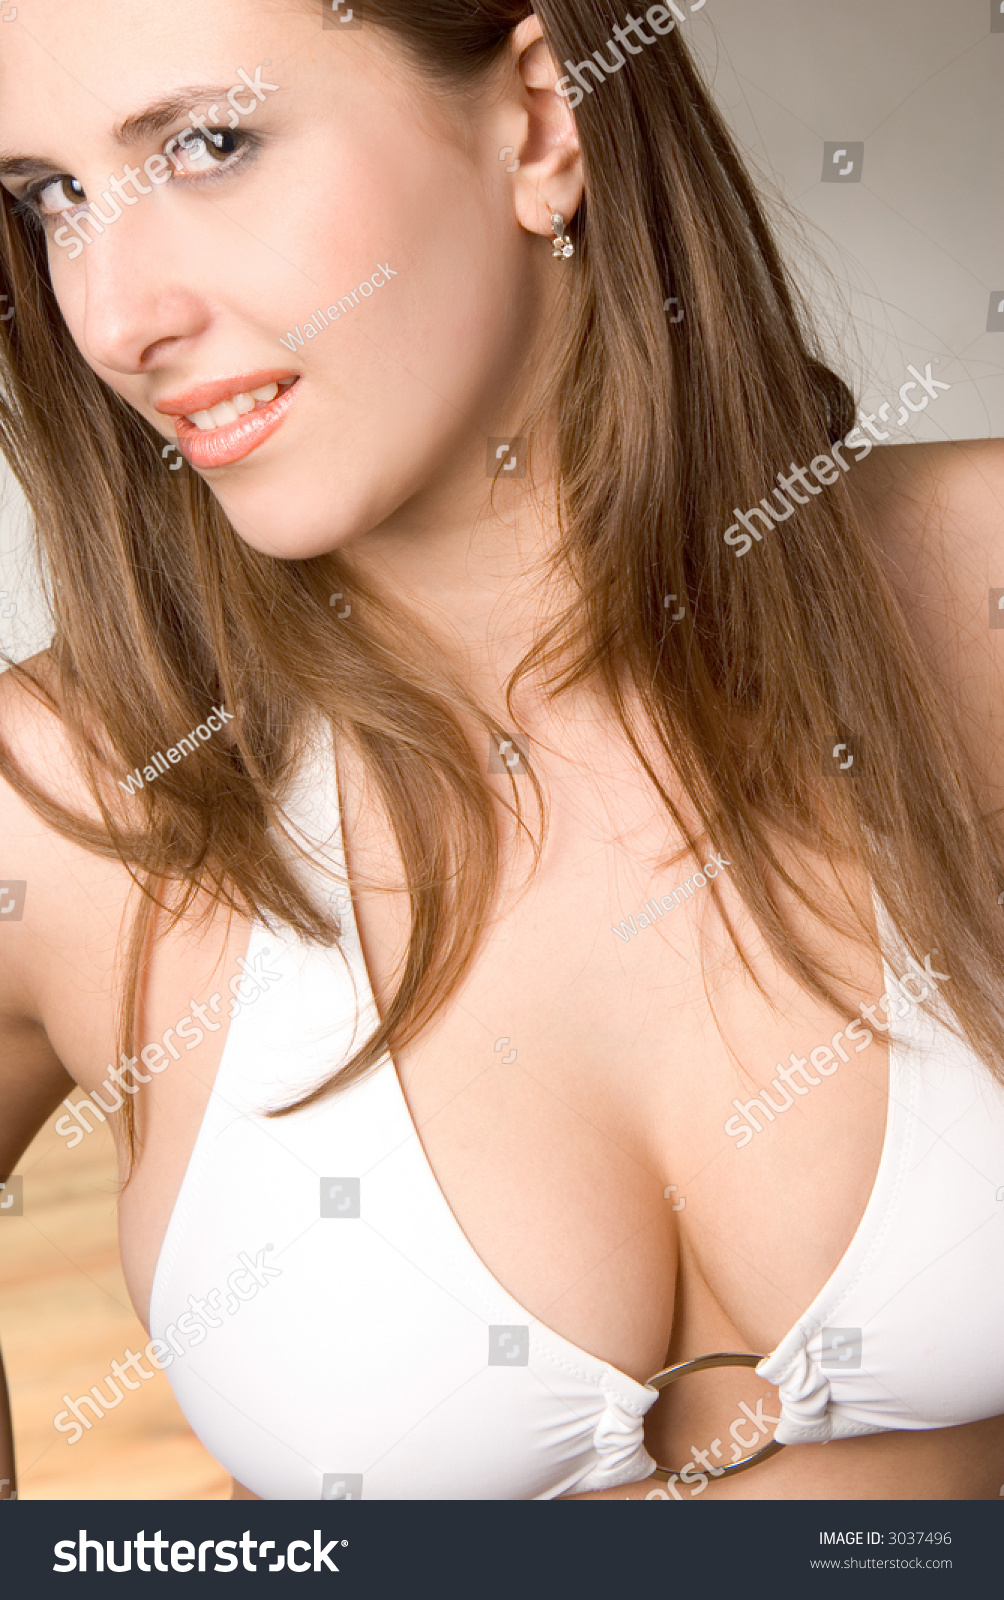 Nice Breast Photos